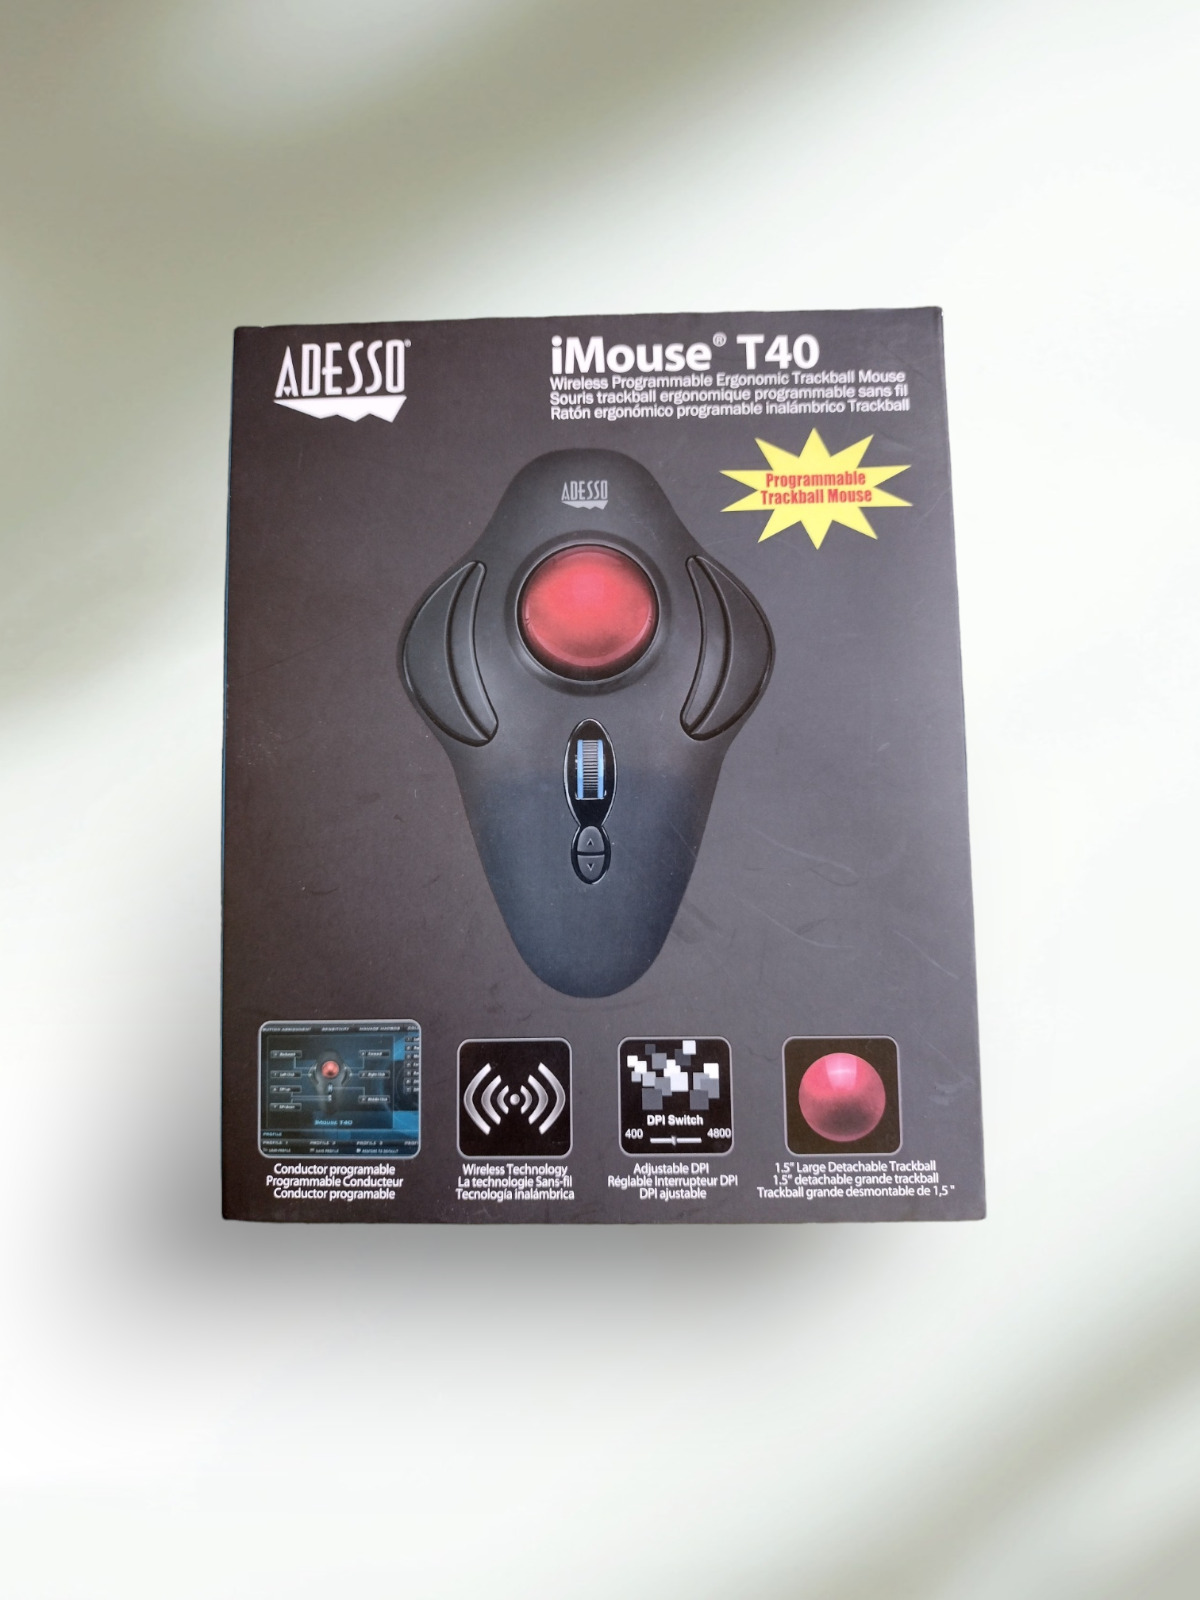 Adesso IMOUSE T40 Mouse 2.4GHz Wireless Ergonomic Programable Desktop Trackball